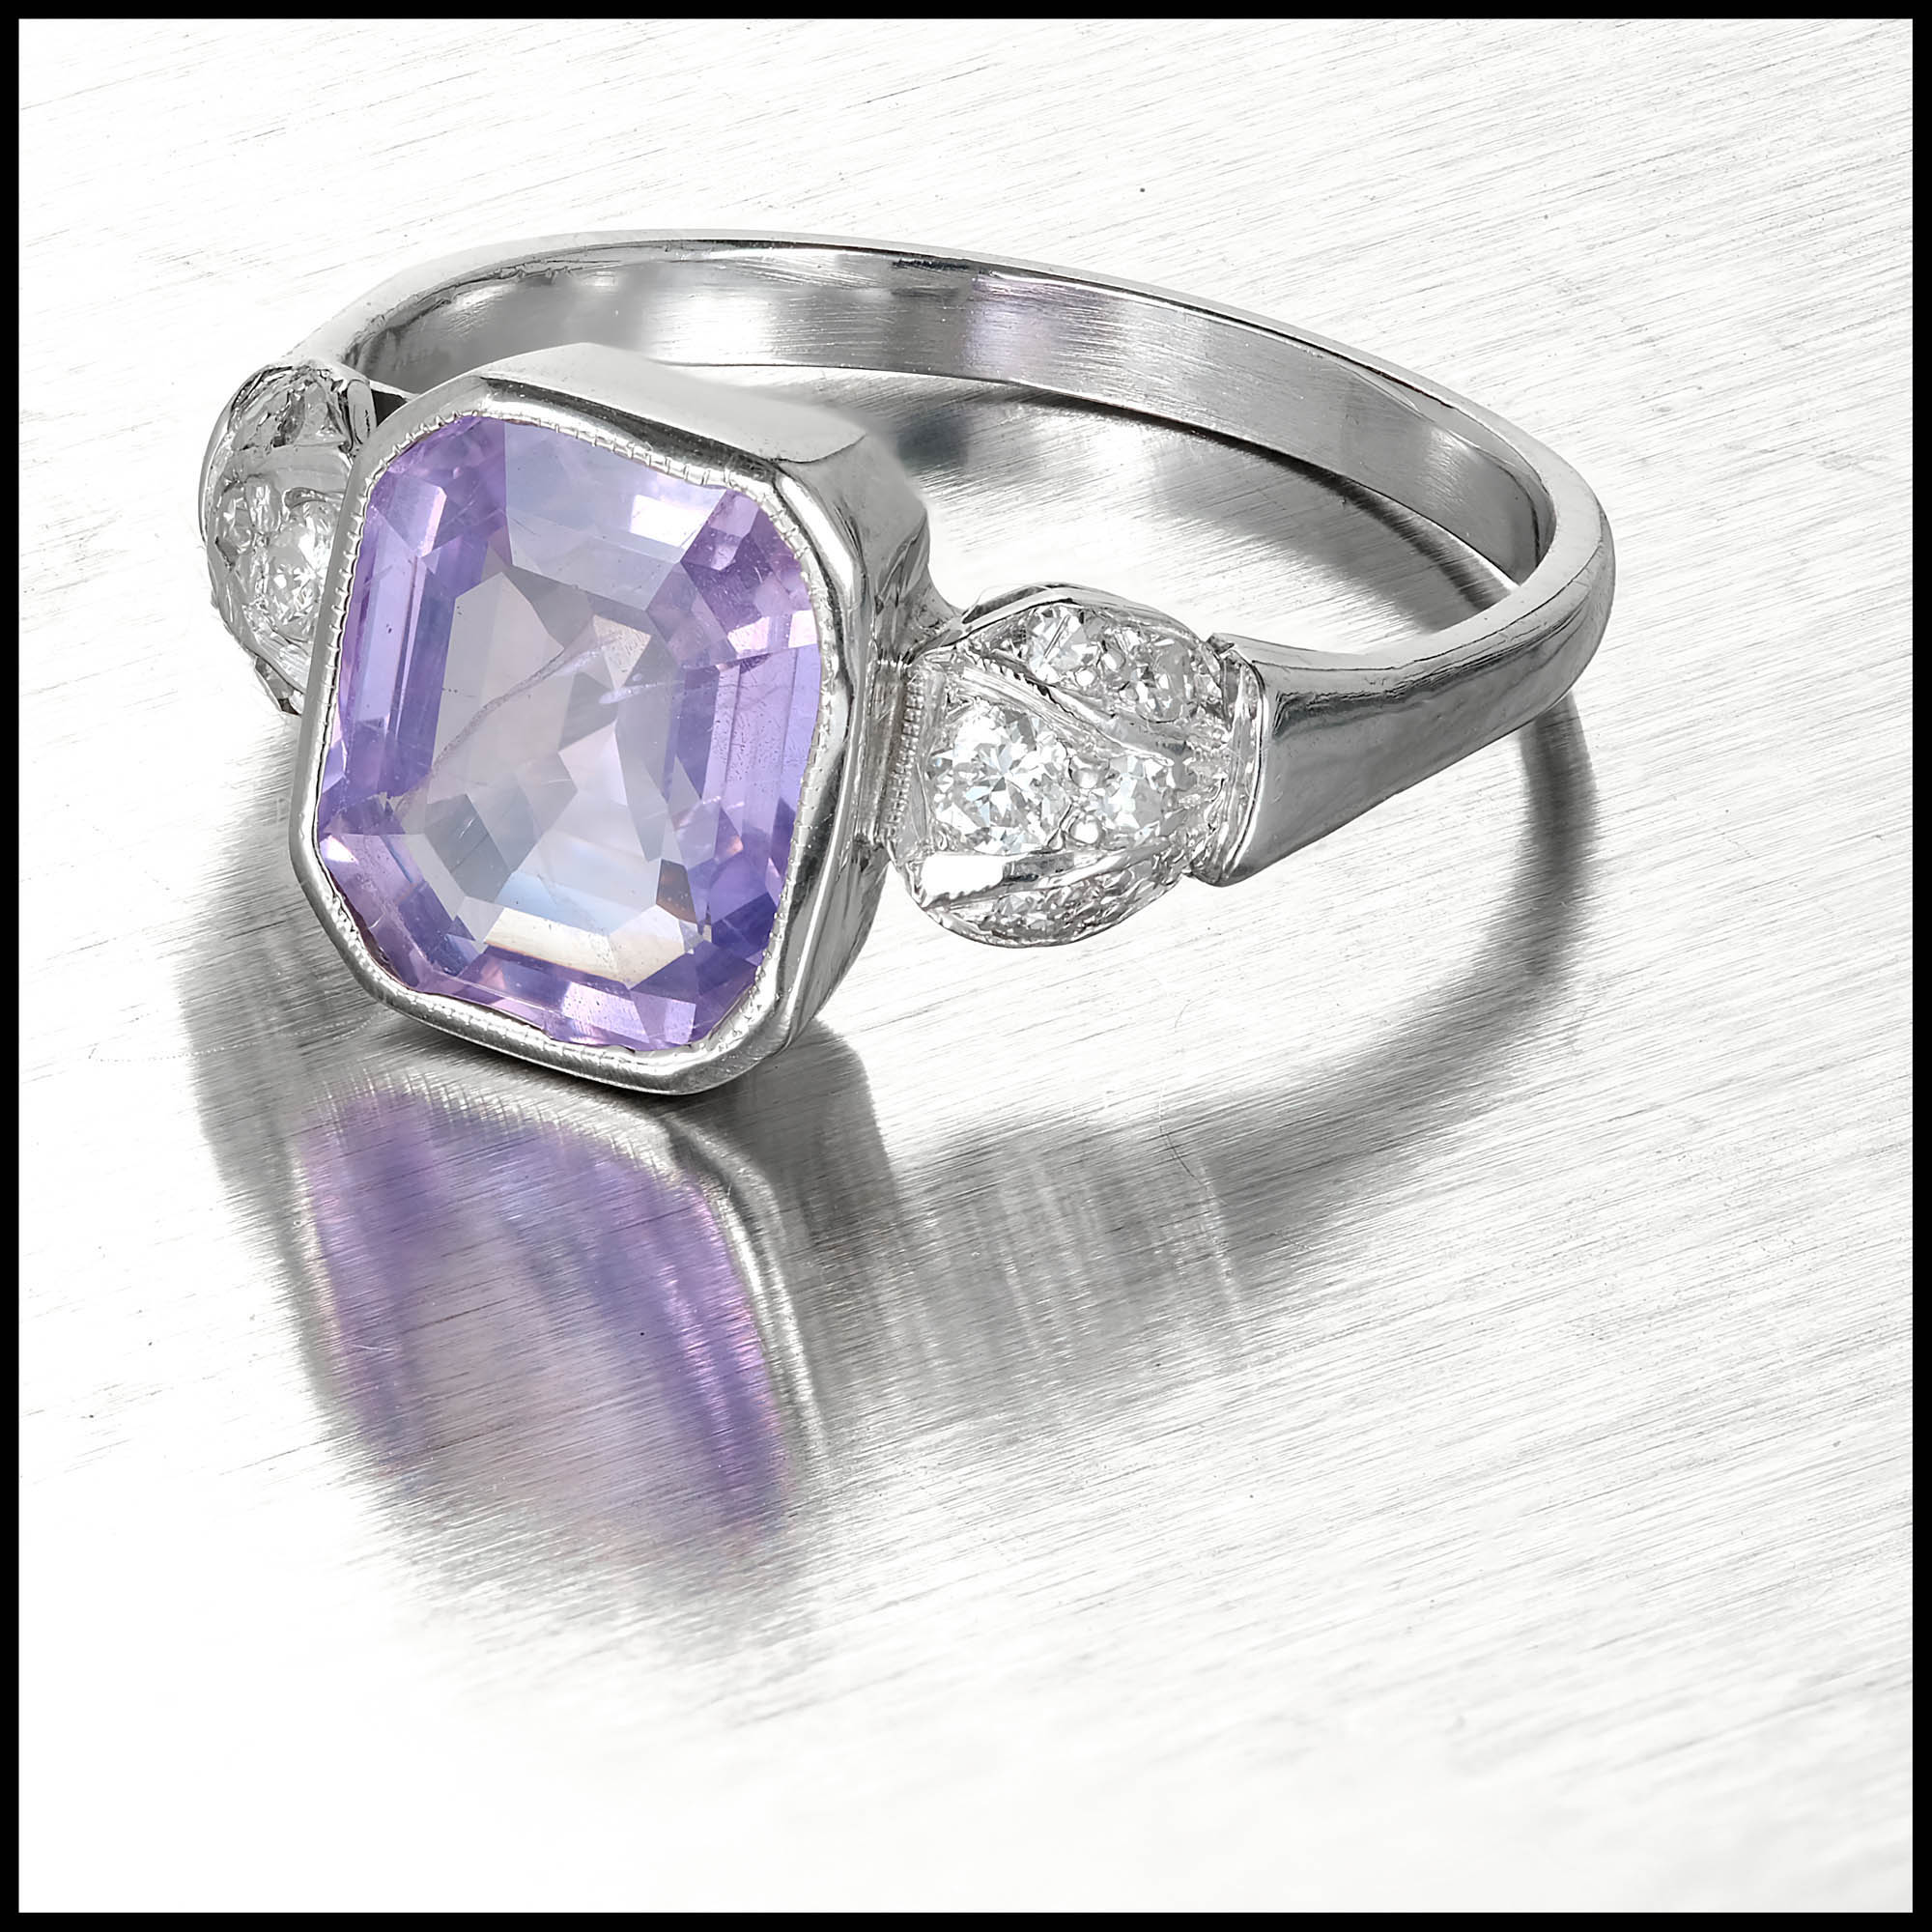 Antique Art Deco 2.78ct Emerald Cut Purple Sapphire Diamond Ring | eBay